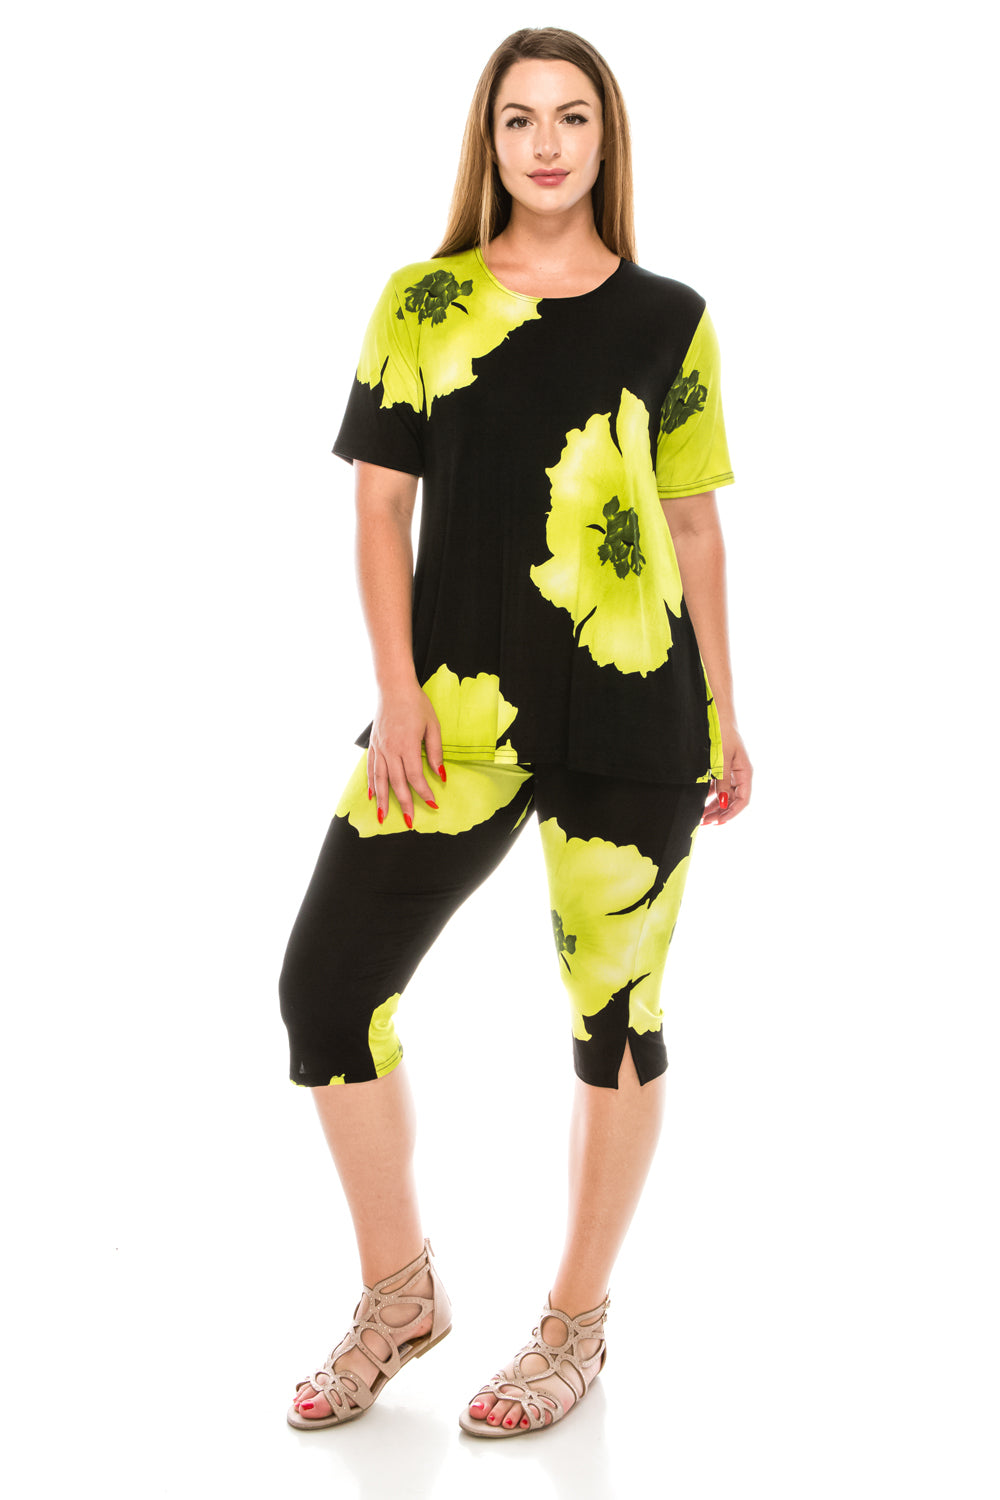 Floral Capri Pant Set Short Sleeve Print-9003BN-SRP1-W113 - Jostar Online